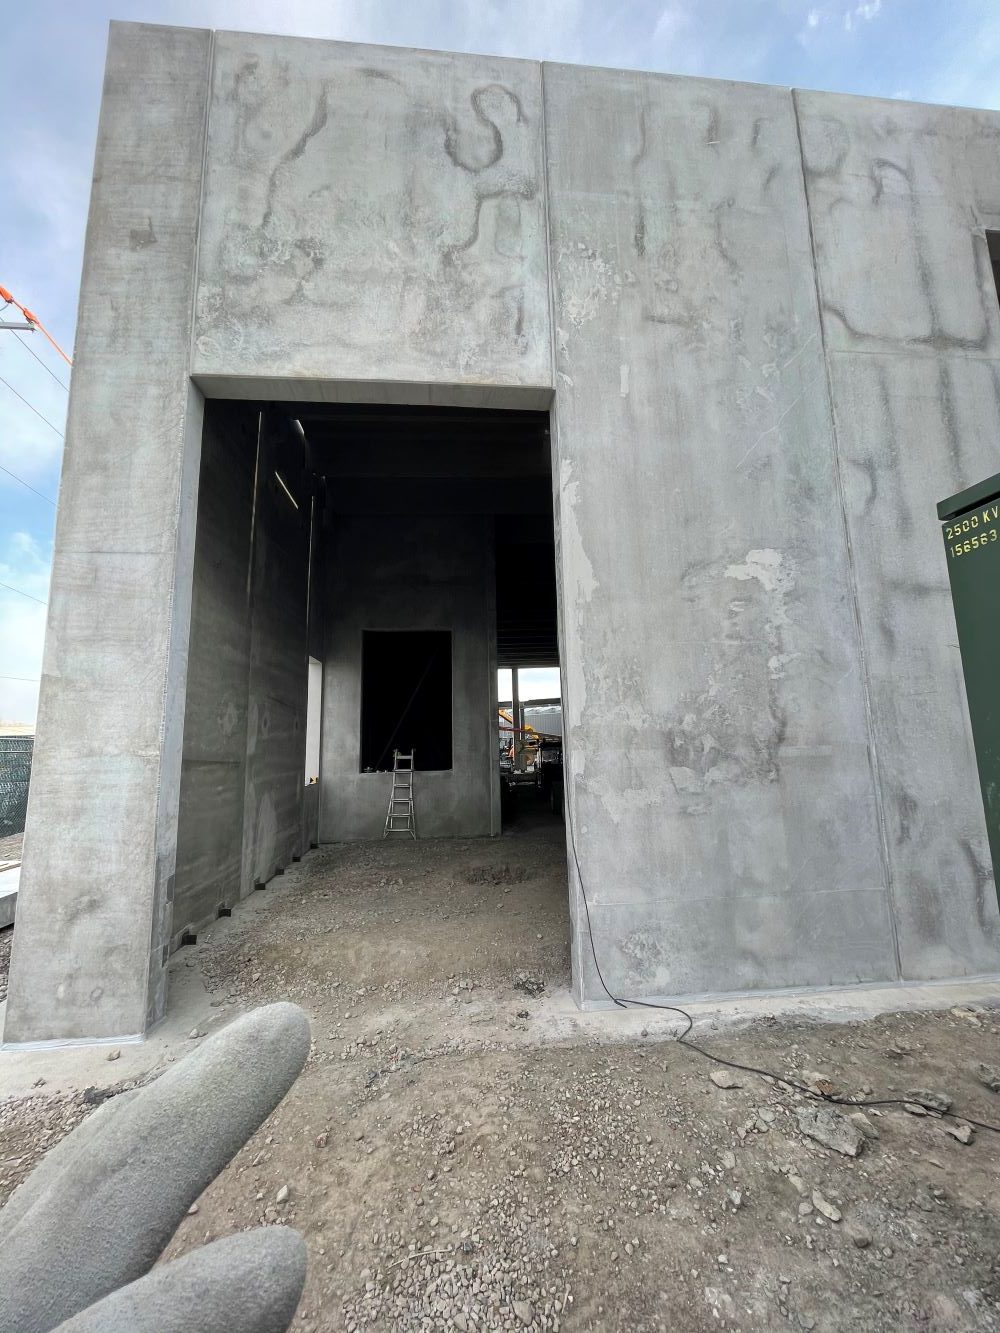 Concrete wall with door opening